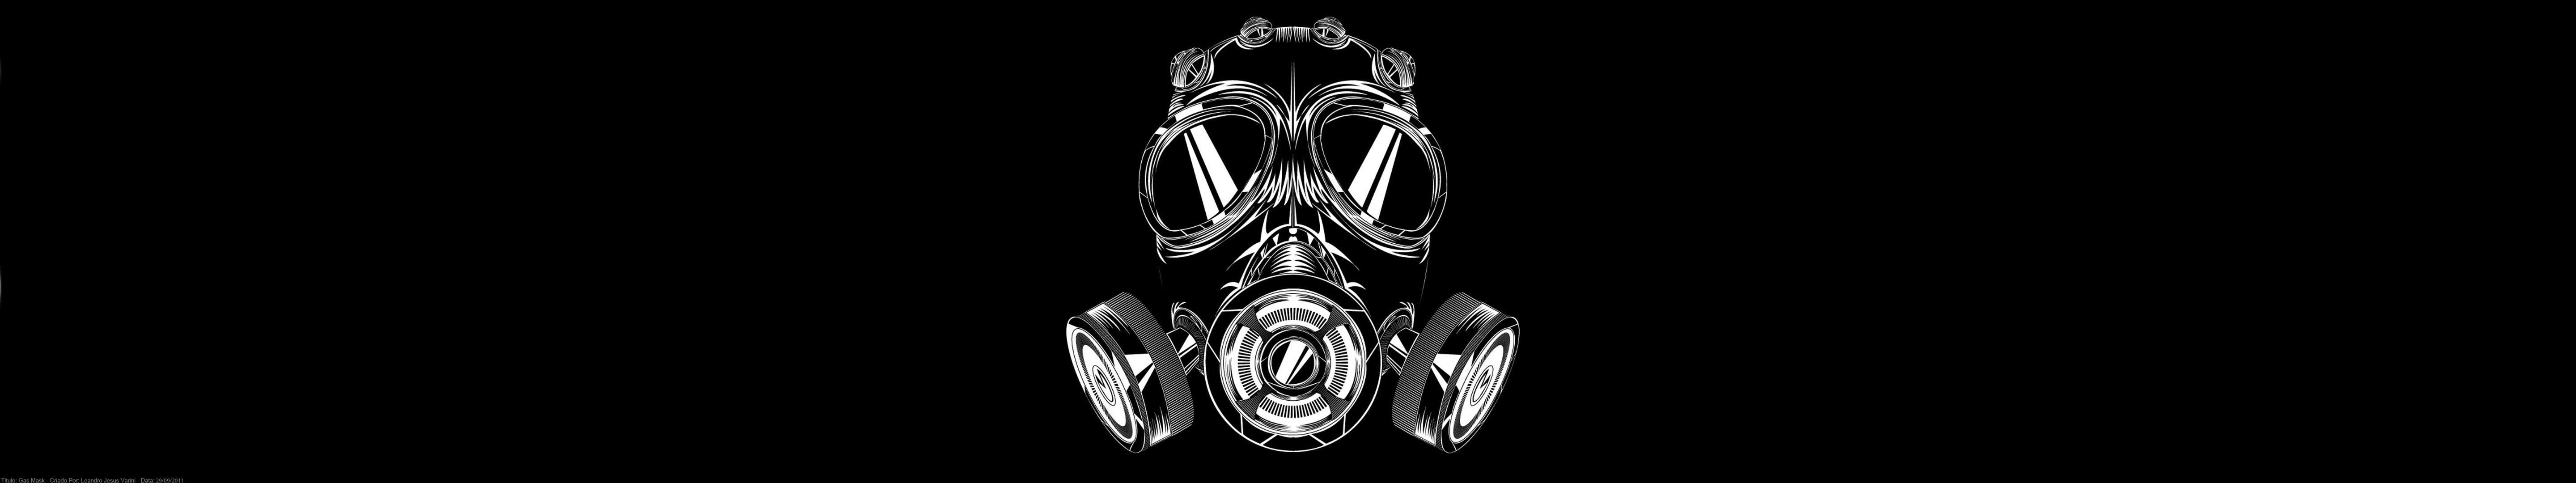 Dark Gas Mask HD Wallpaper Background Image